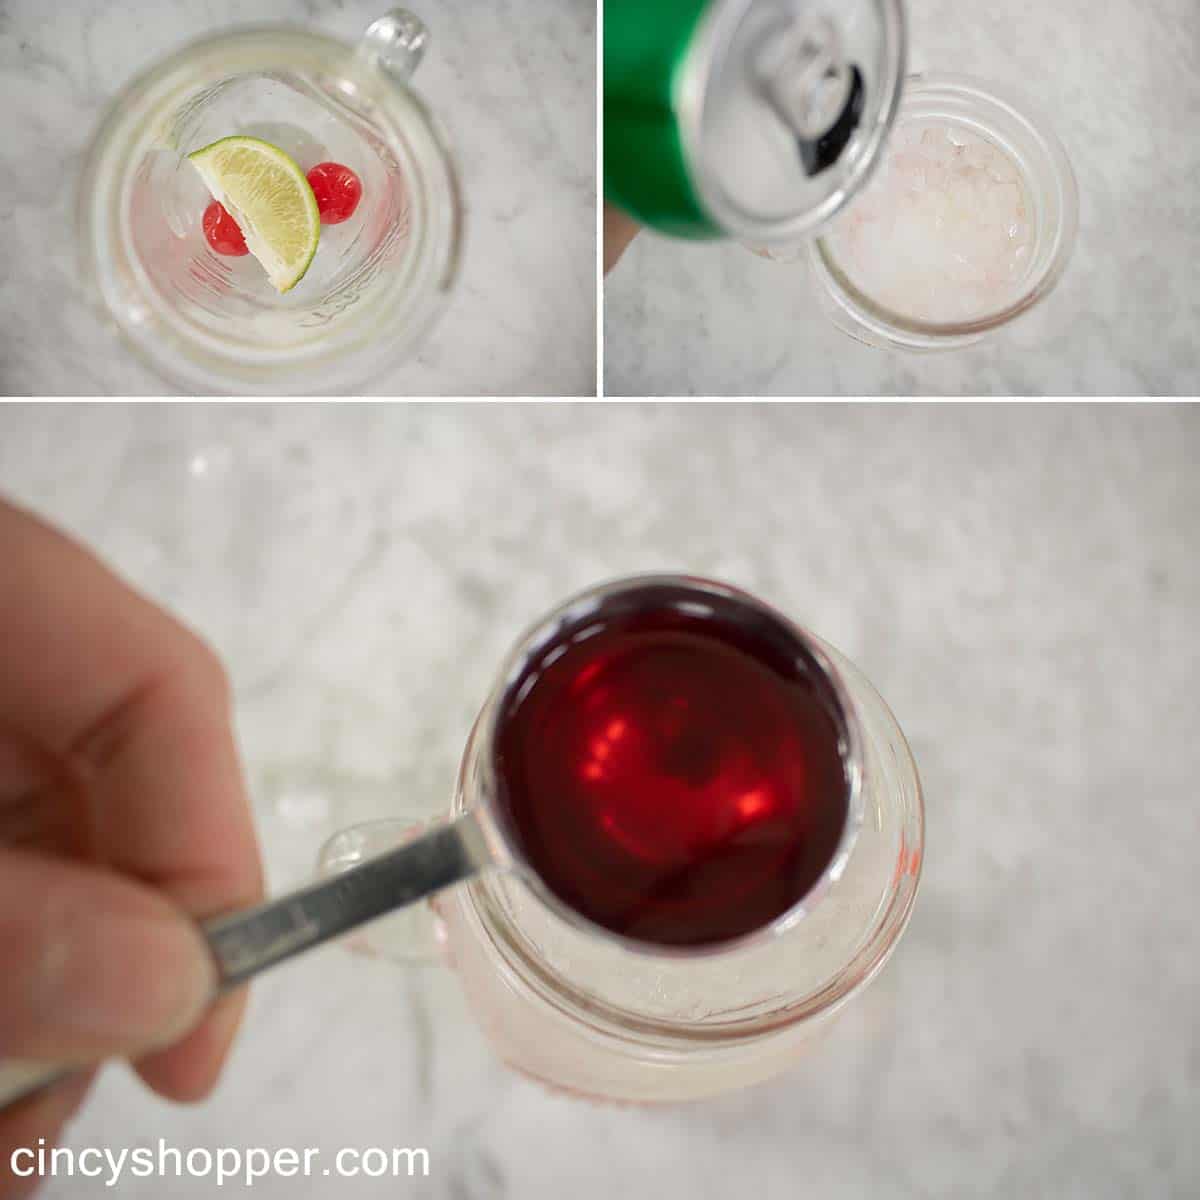 Cherry juice added to glass.